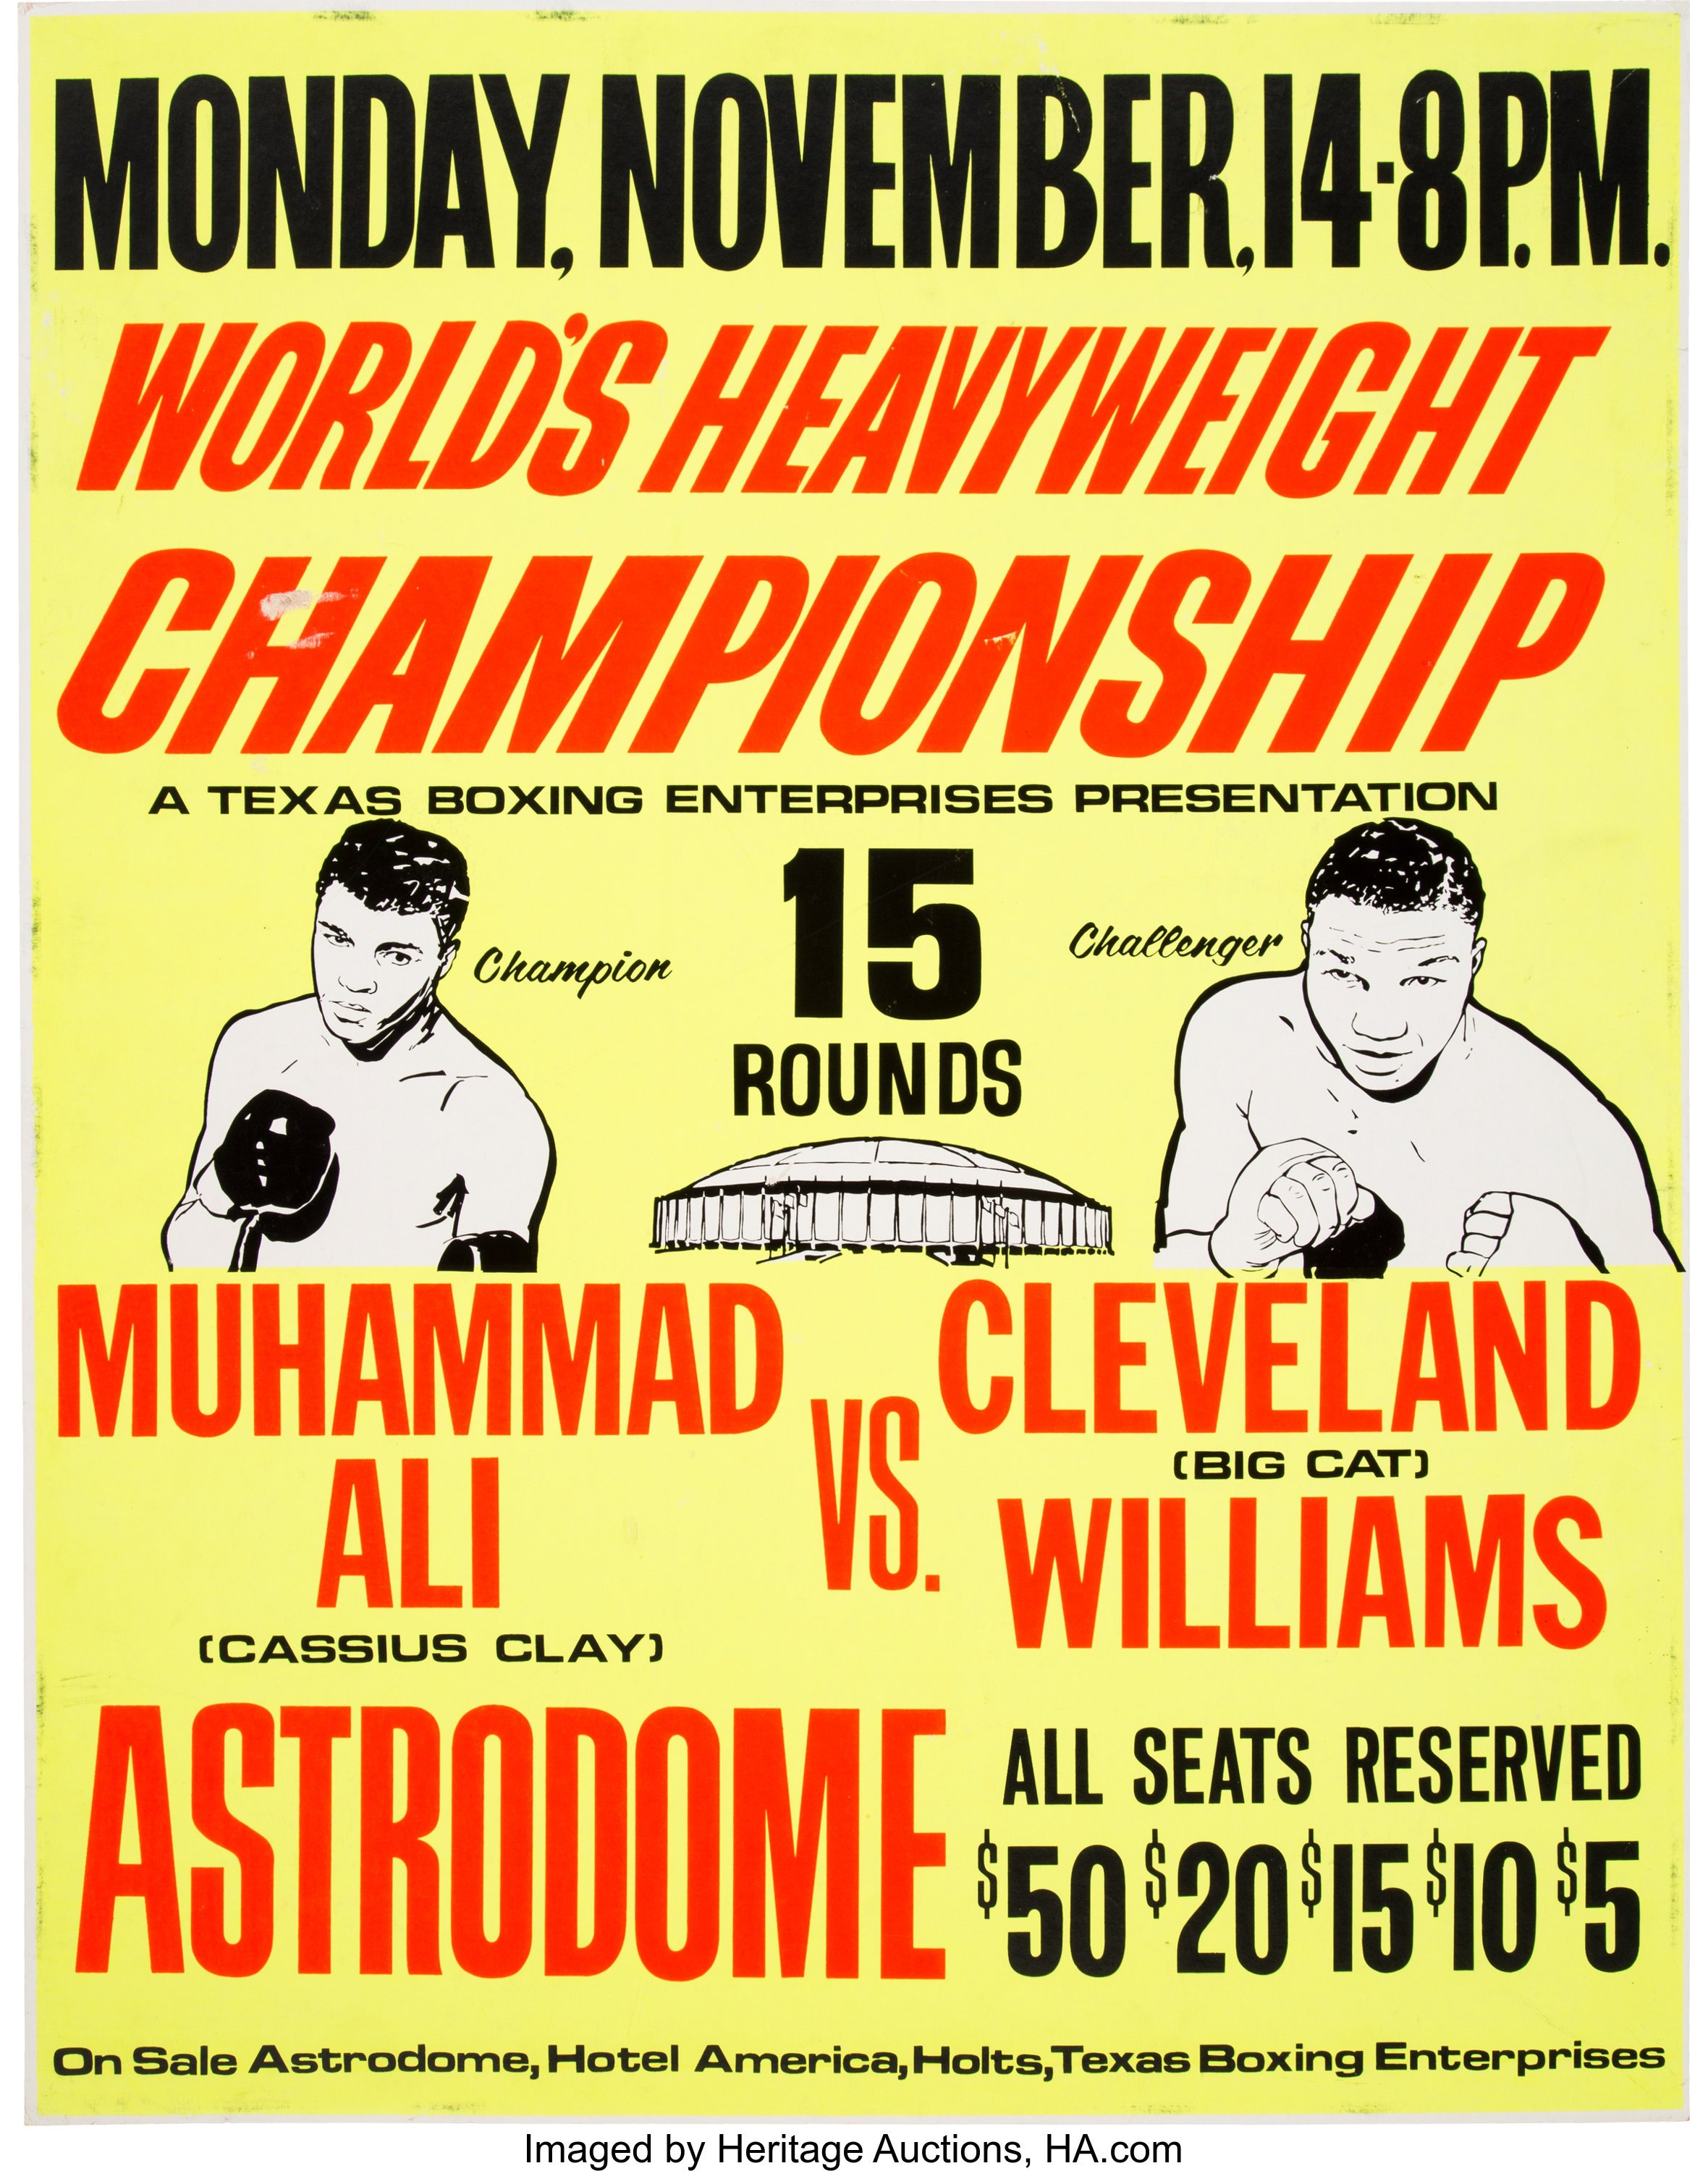 Muhammad Ali vs. Cleveland Williams